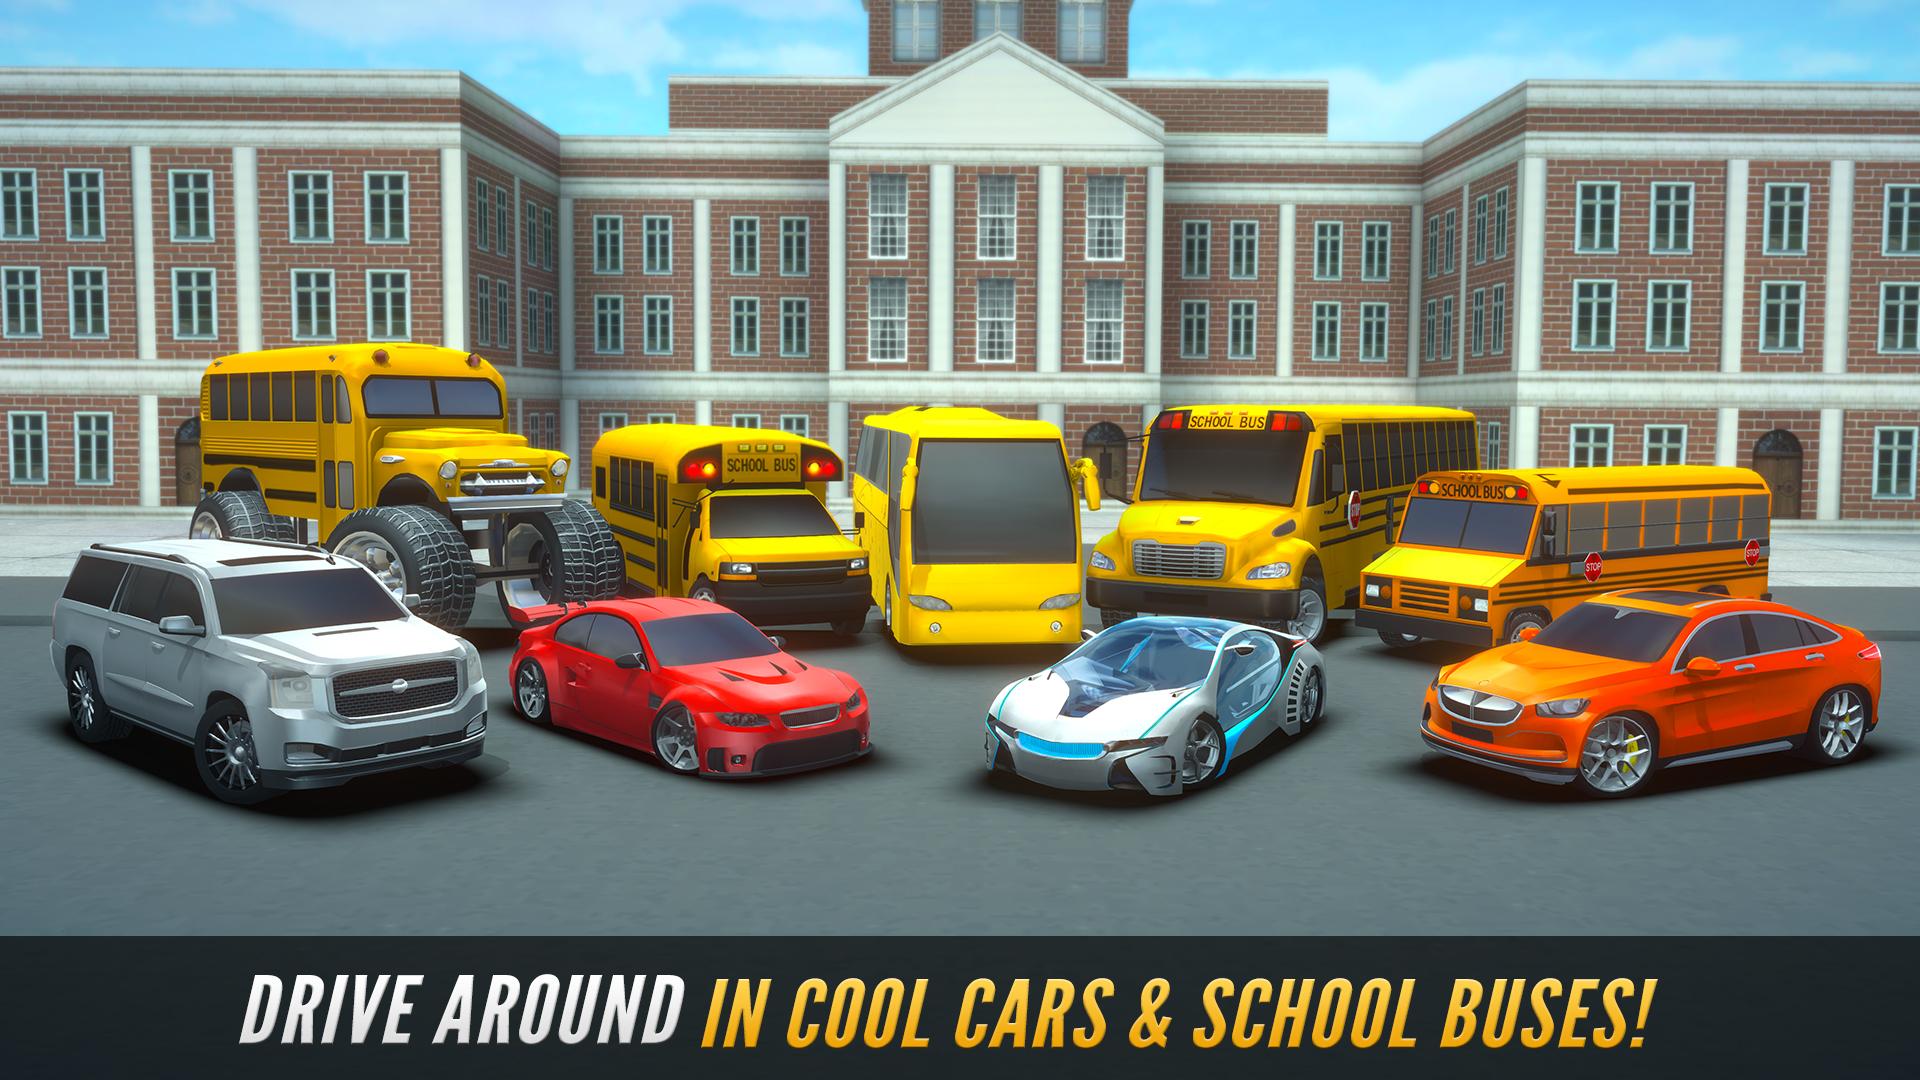 Super High School Bus Driving Simulator 3D - 2020 2.5 Screenshot 4